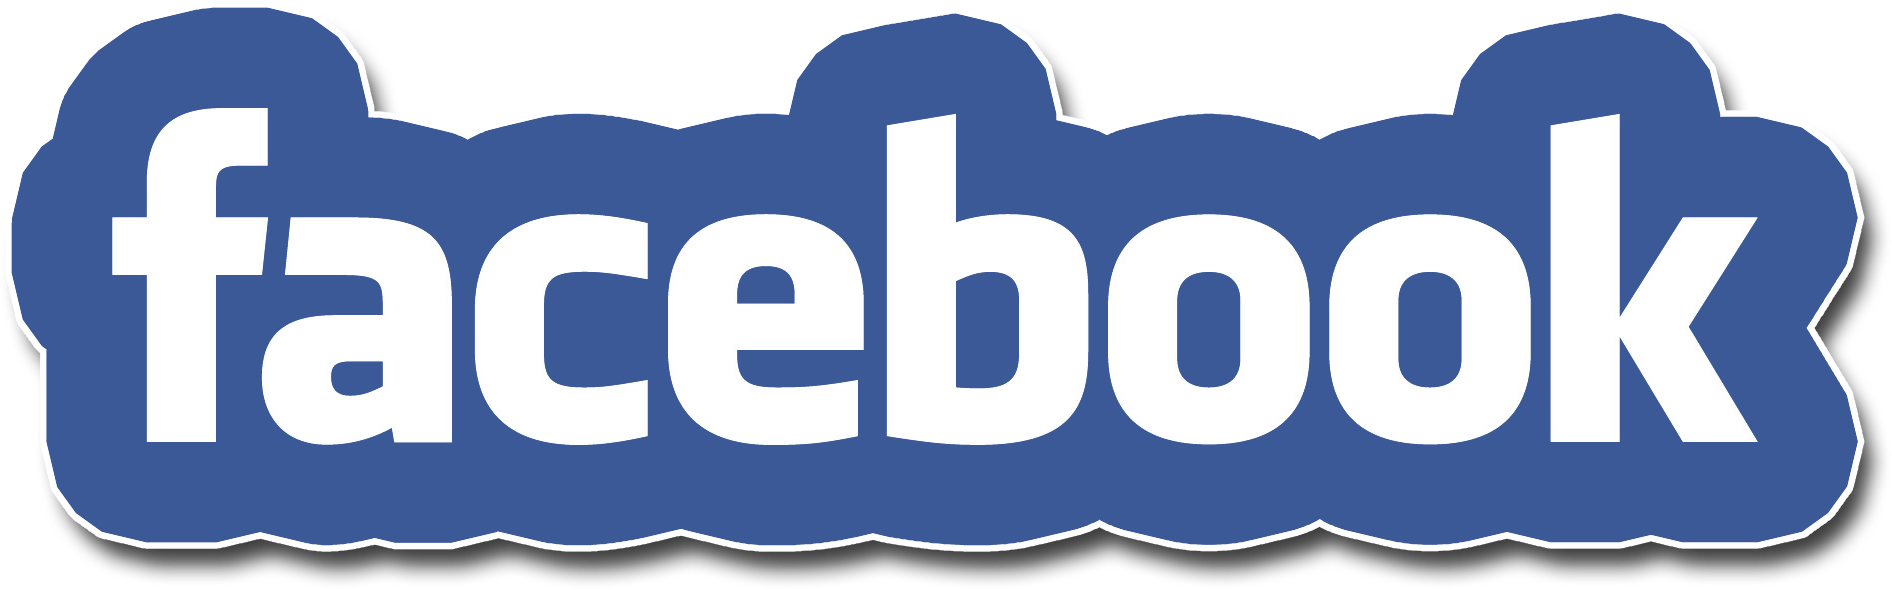 Find Us On Facebook - Facebook Icon Png Transparent Background (2148x839)